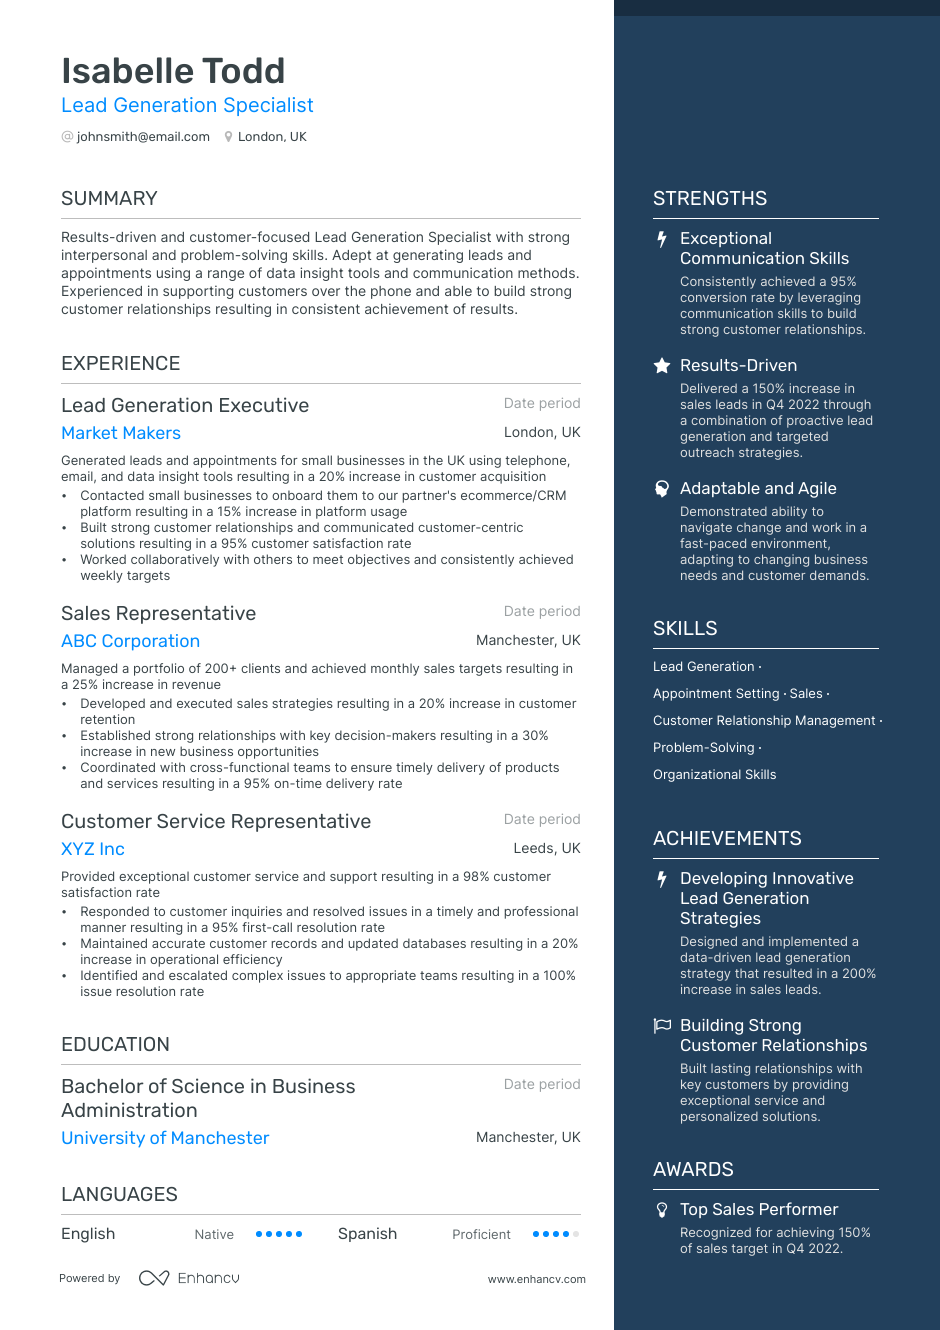 Lead Generation Resume Example 2023 | Enhancv.com (Layout, Skills, & Job Description)